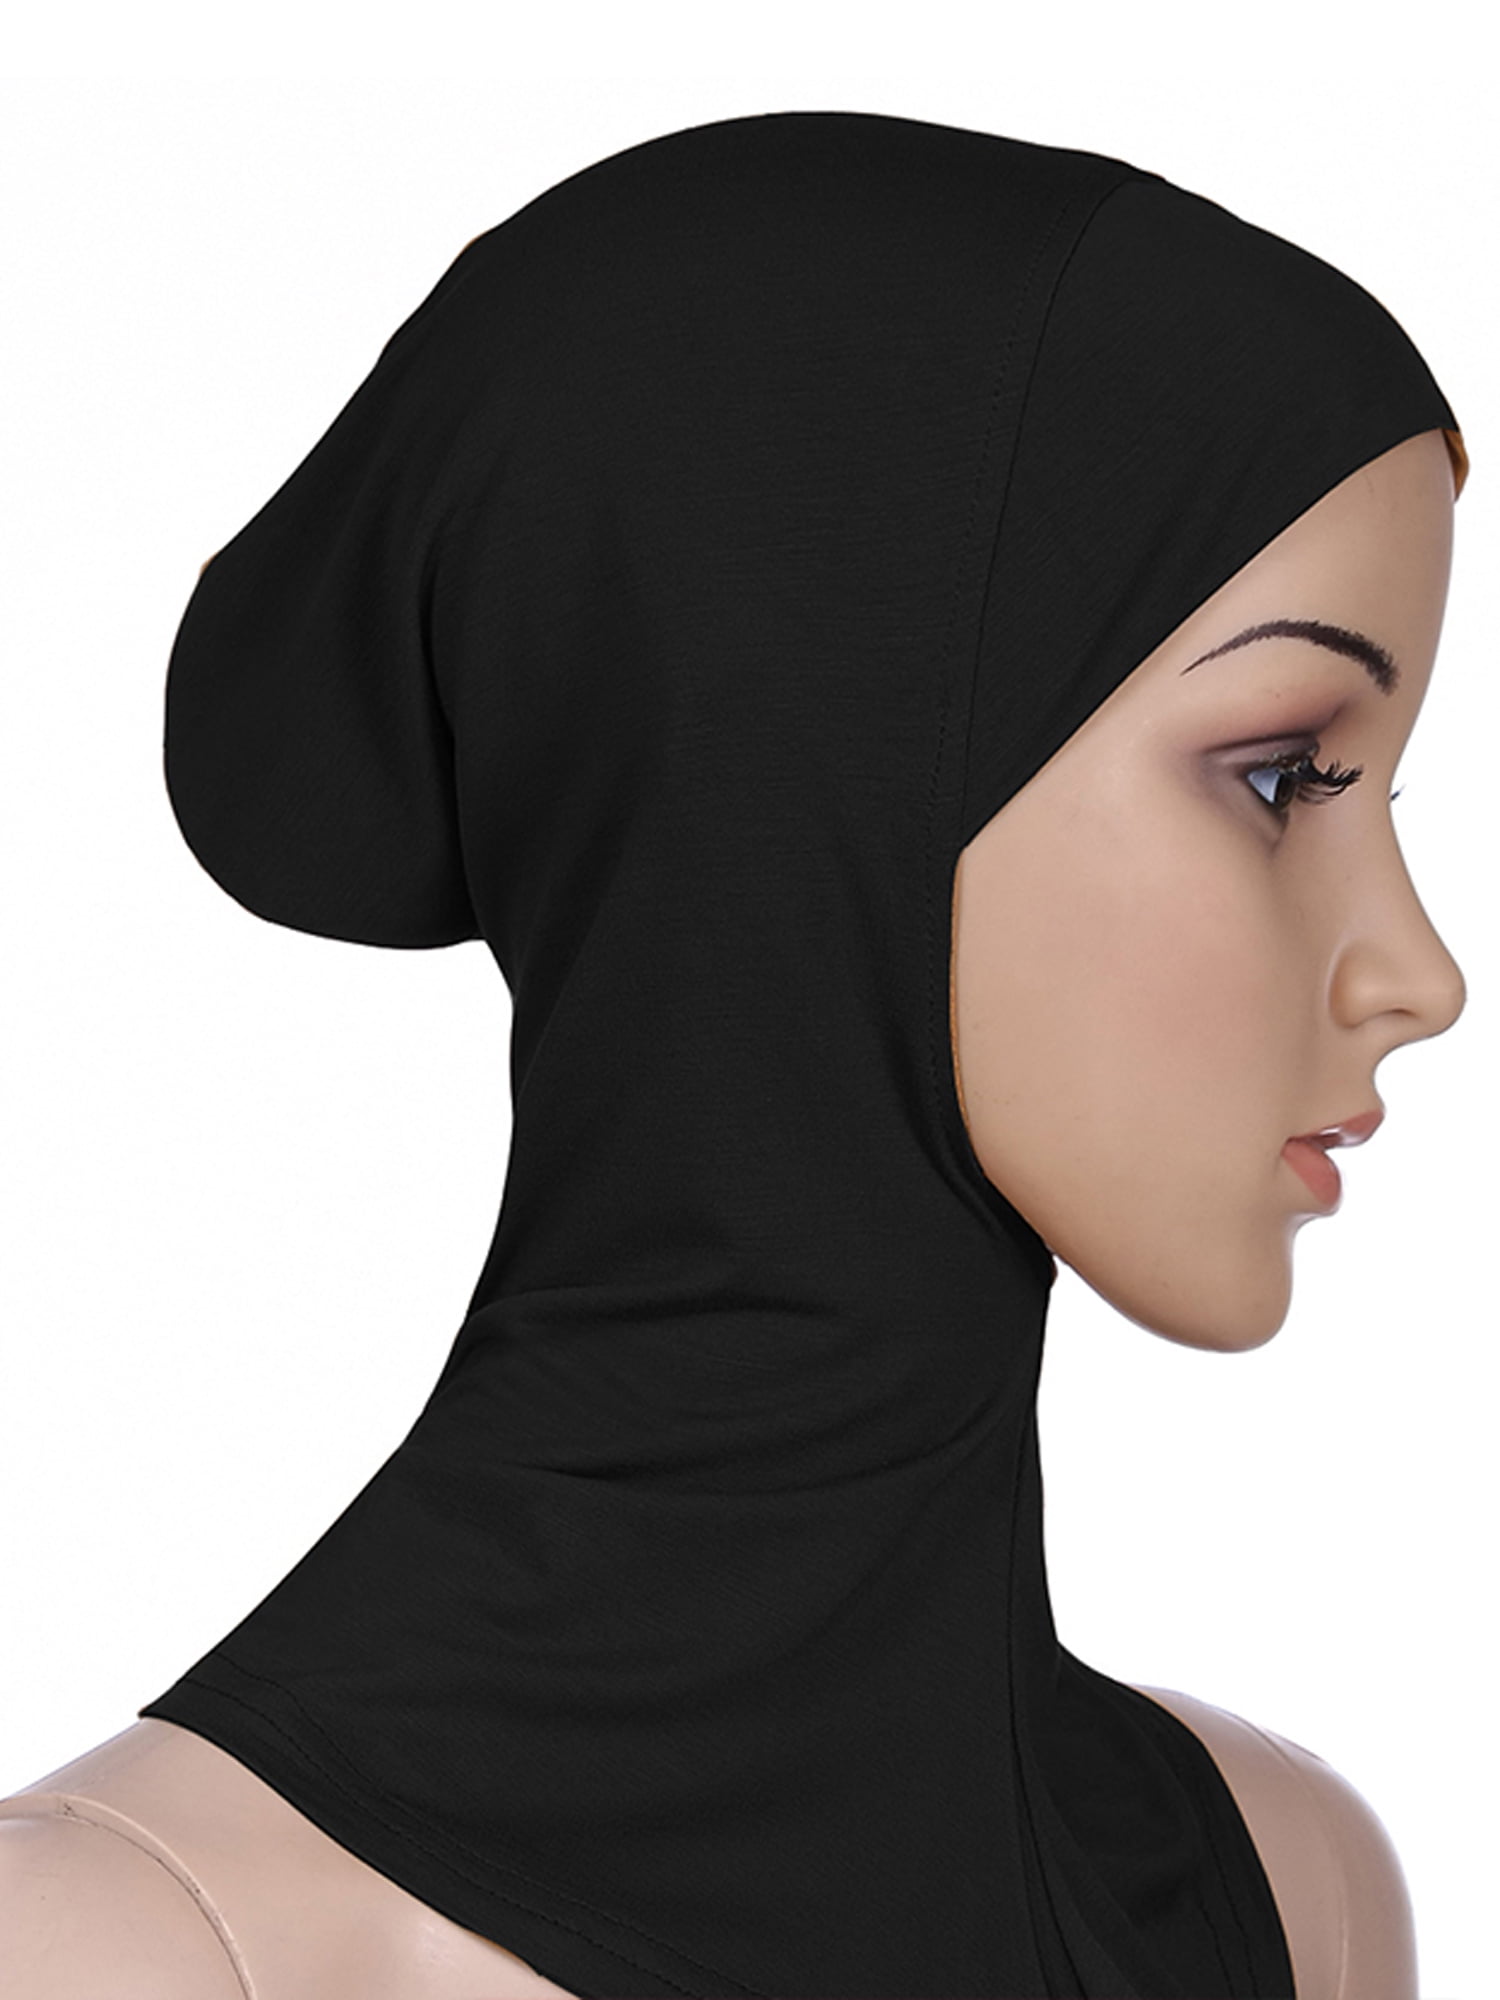 Women Muslim Full Cover Hijab Ninja Modal  Underscarf Head Neck Bonnet Hat Cap 